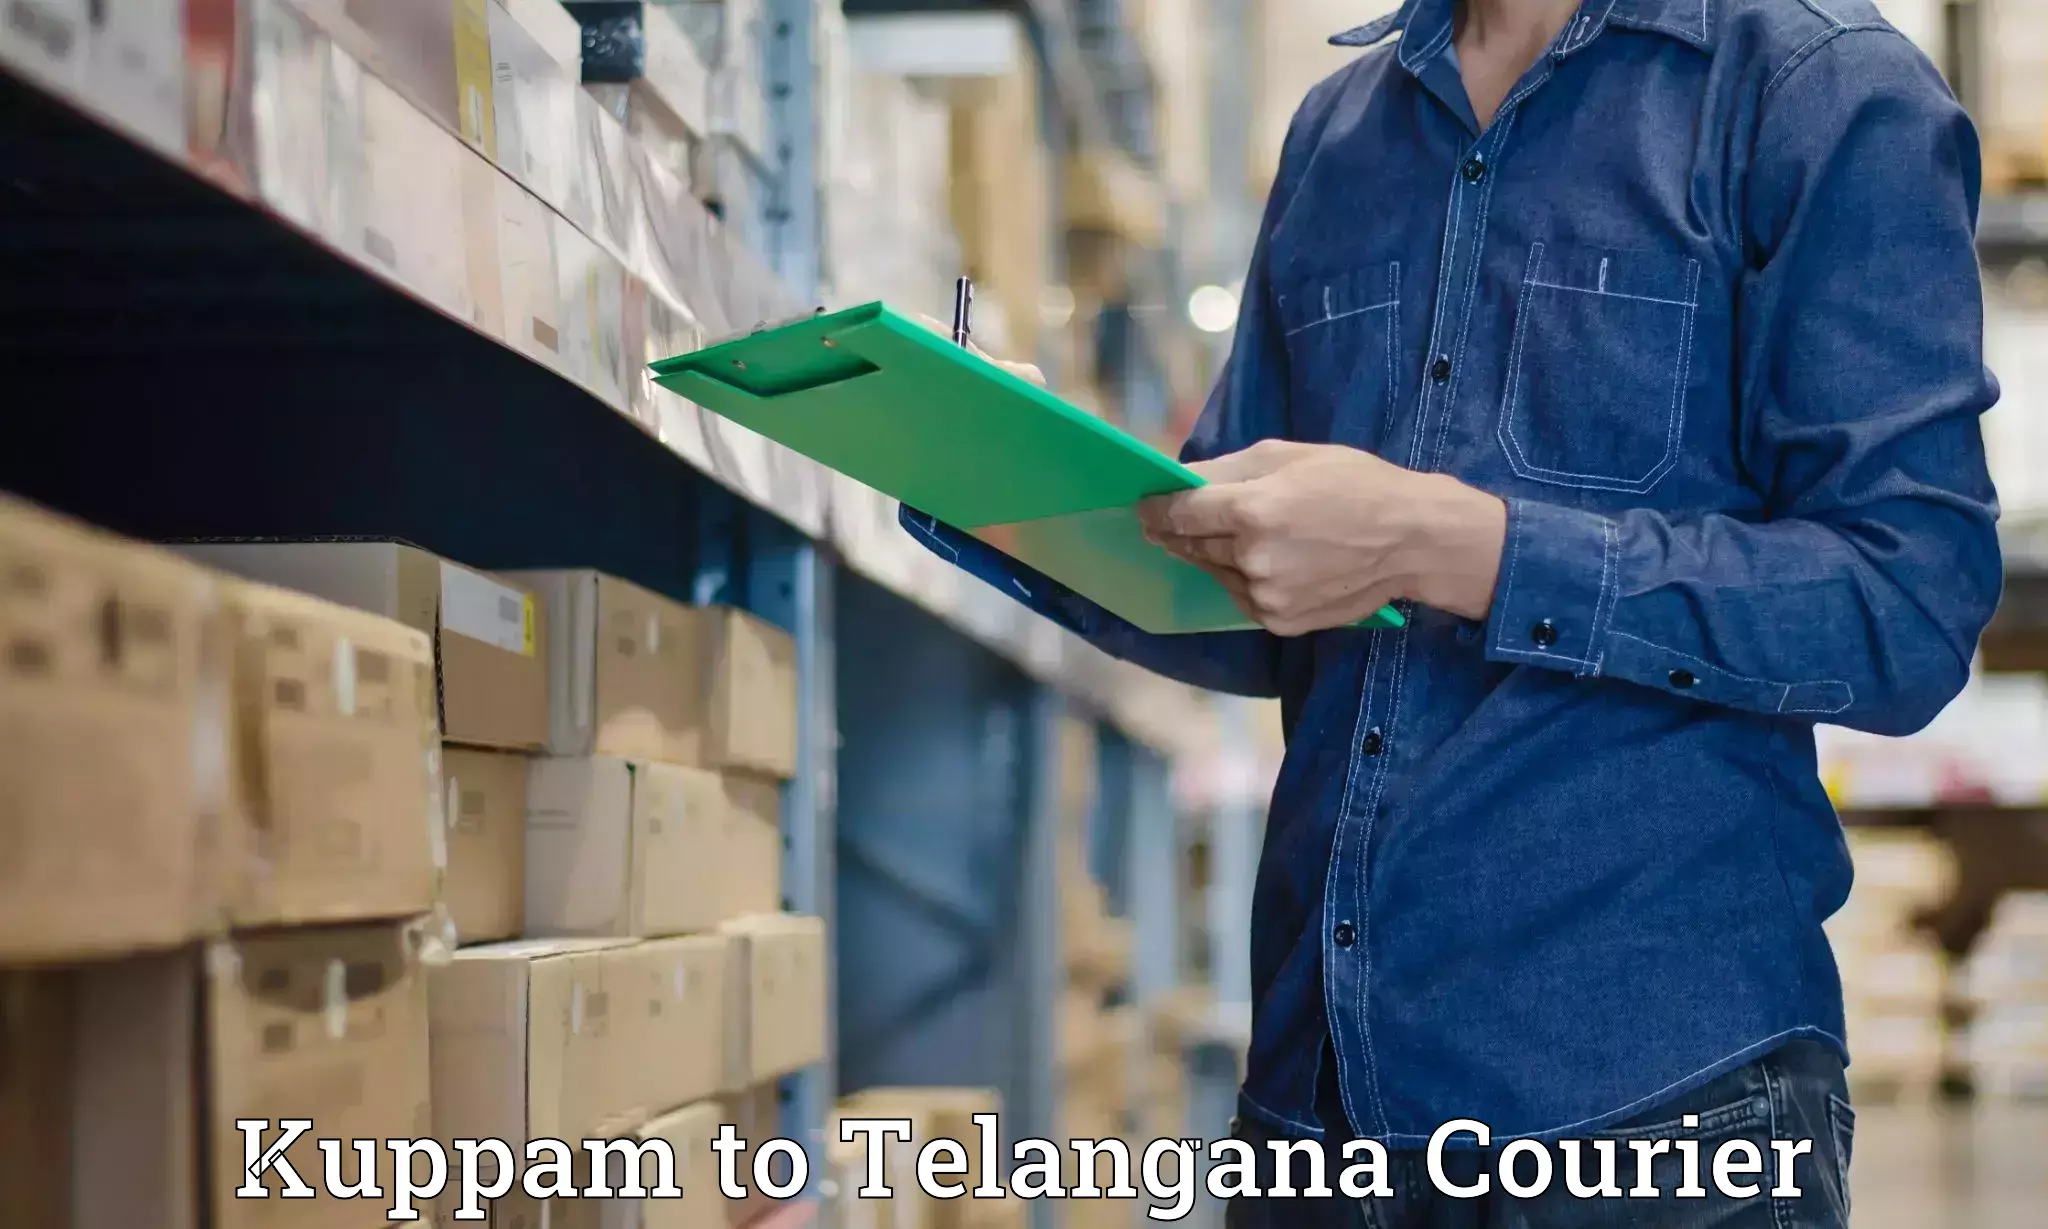 Courier service efficiency in Kuppam to Dubbak